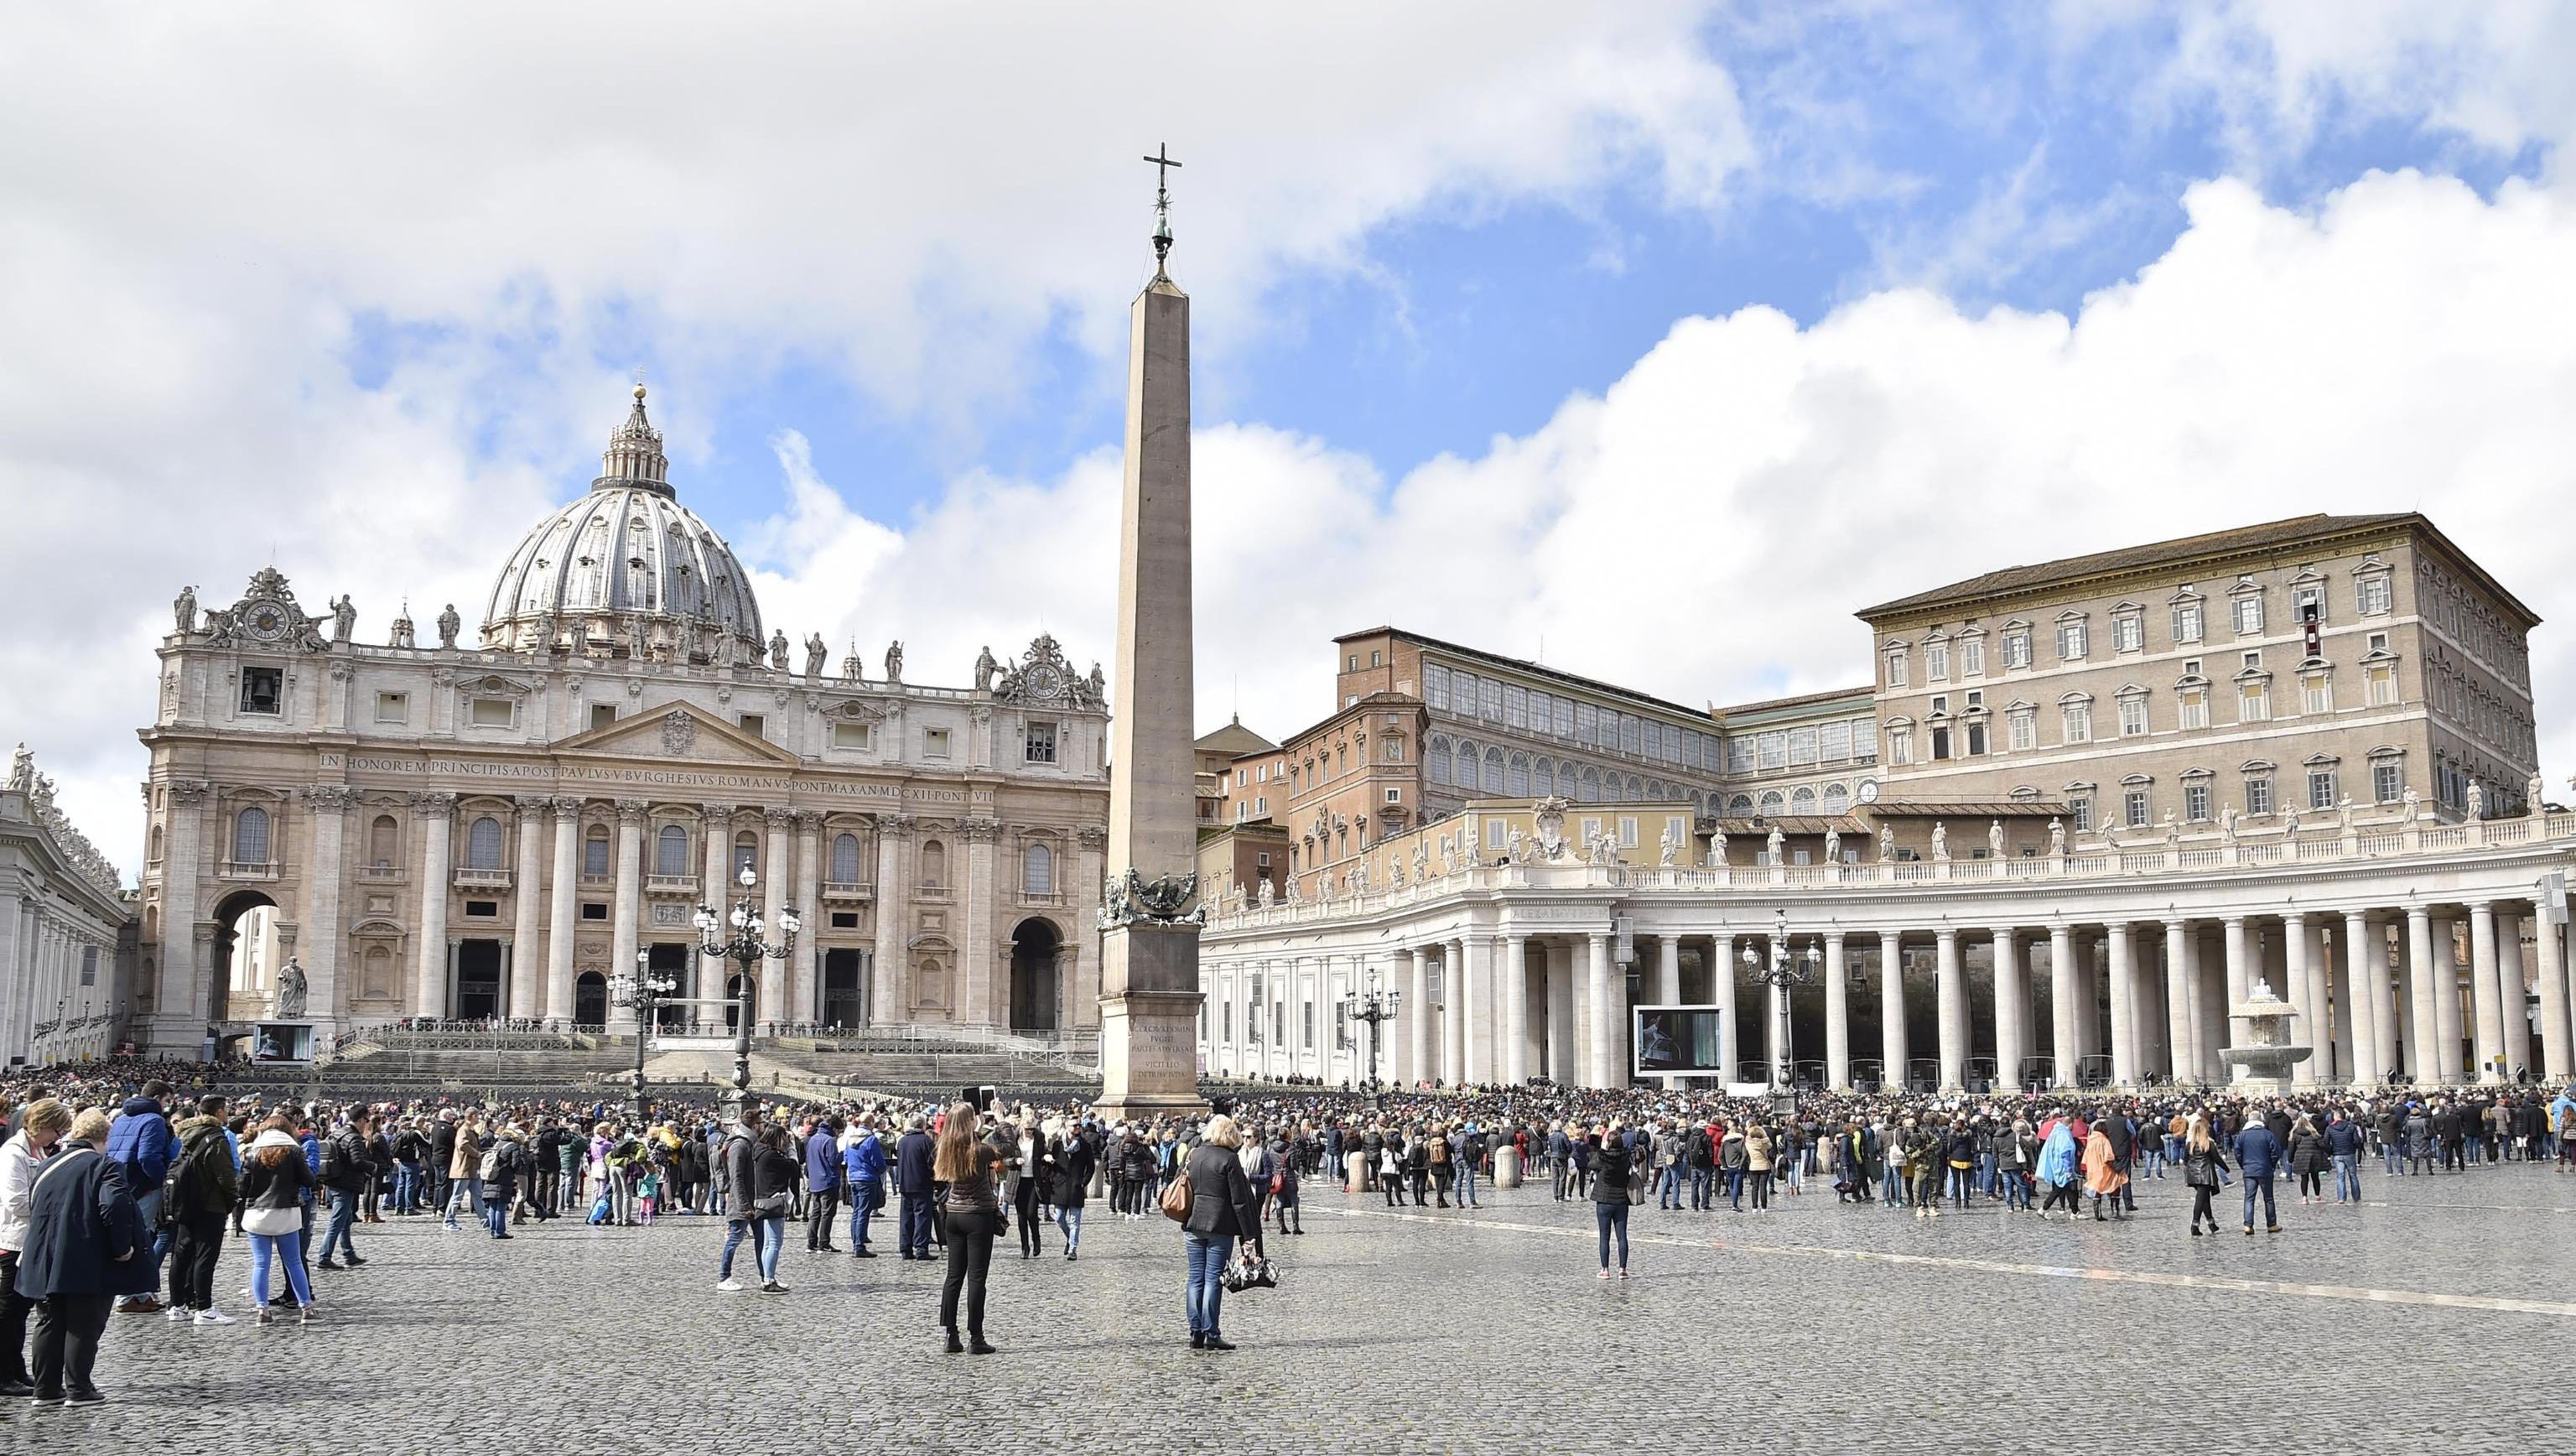 Religion Church Porn - Sex orgies, prostitution, porn: Claims shake Catholic Church in Italy